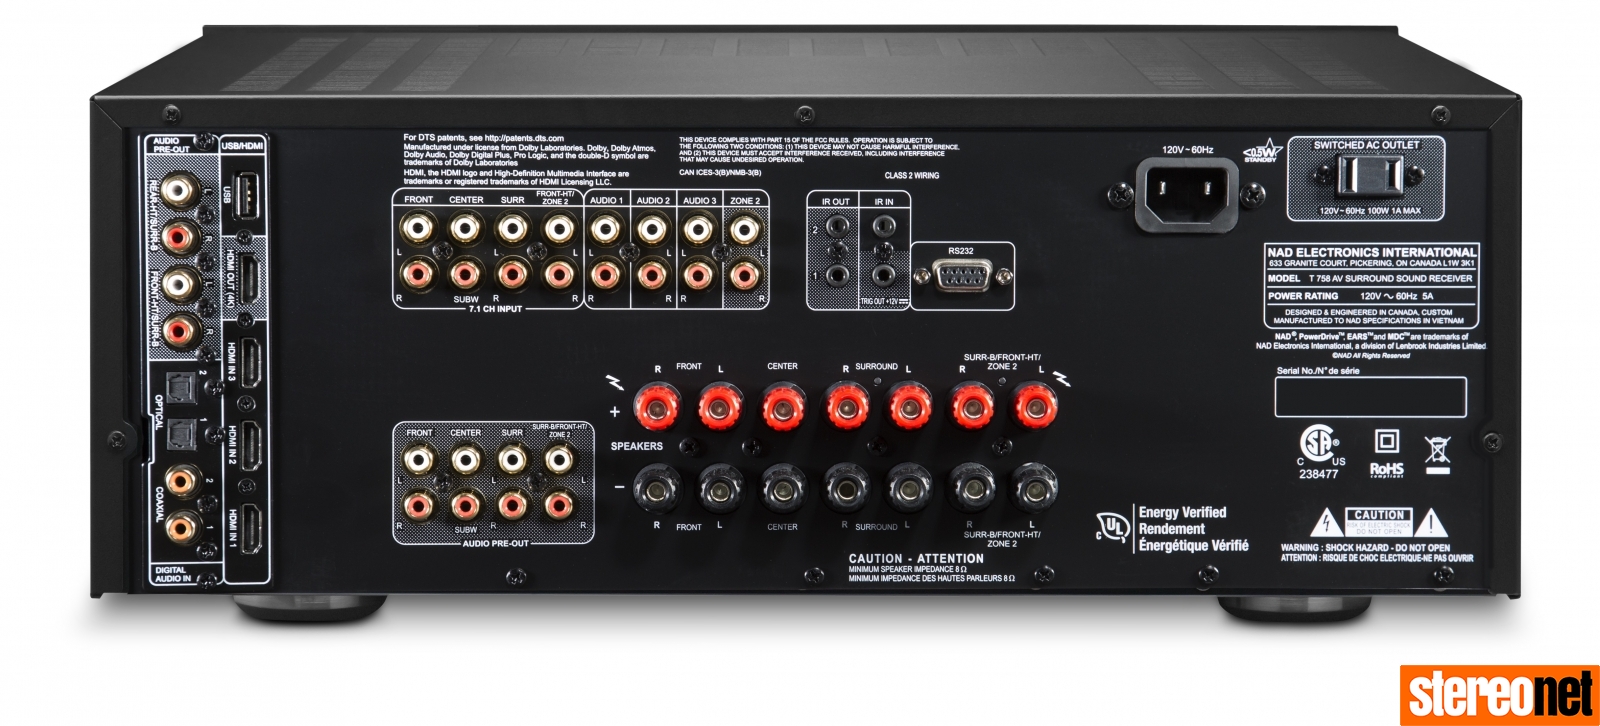 NAD T 758 V3i surround sound receiver